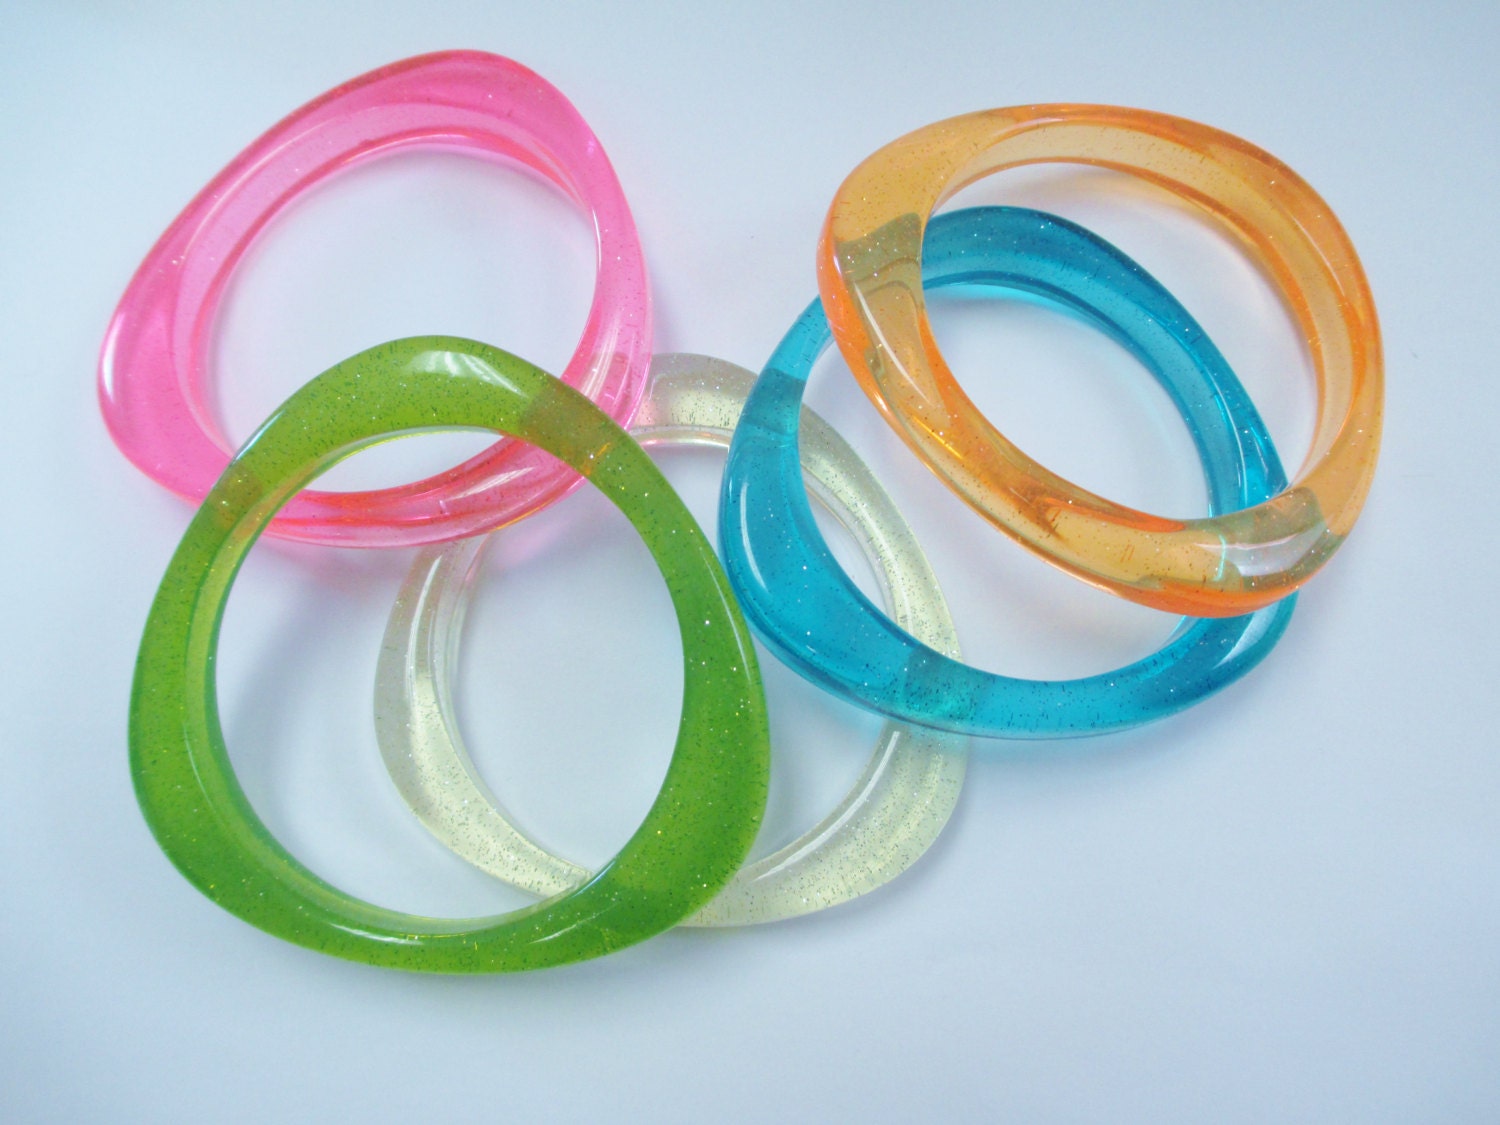 SPARKLY LADIES!: Plastic Bag Bracelet